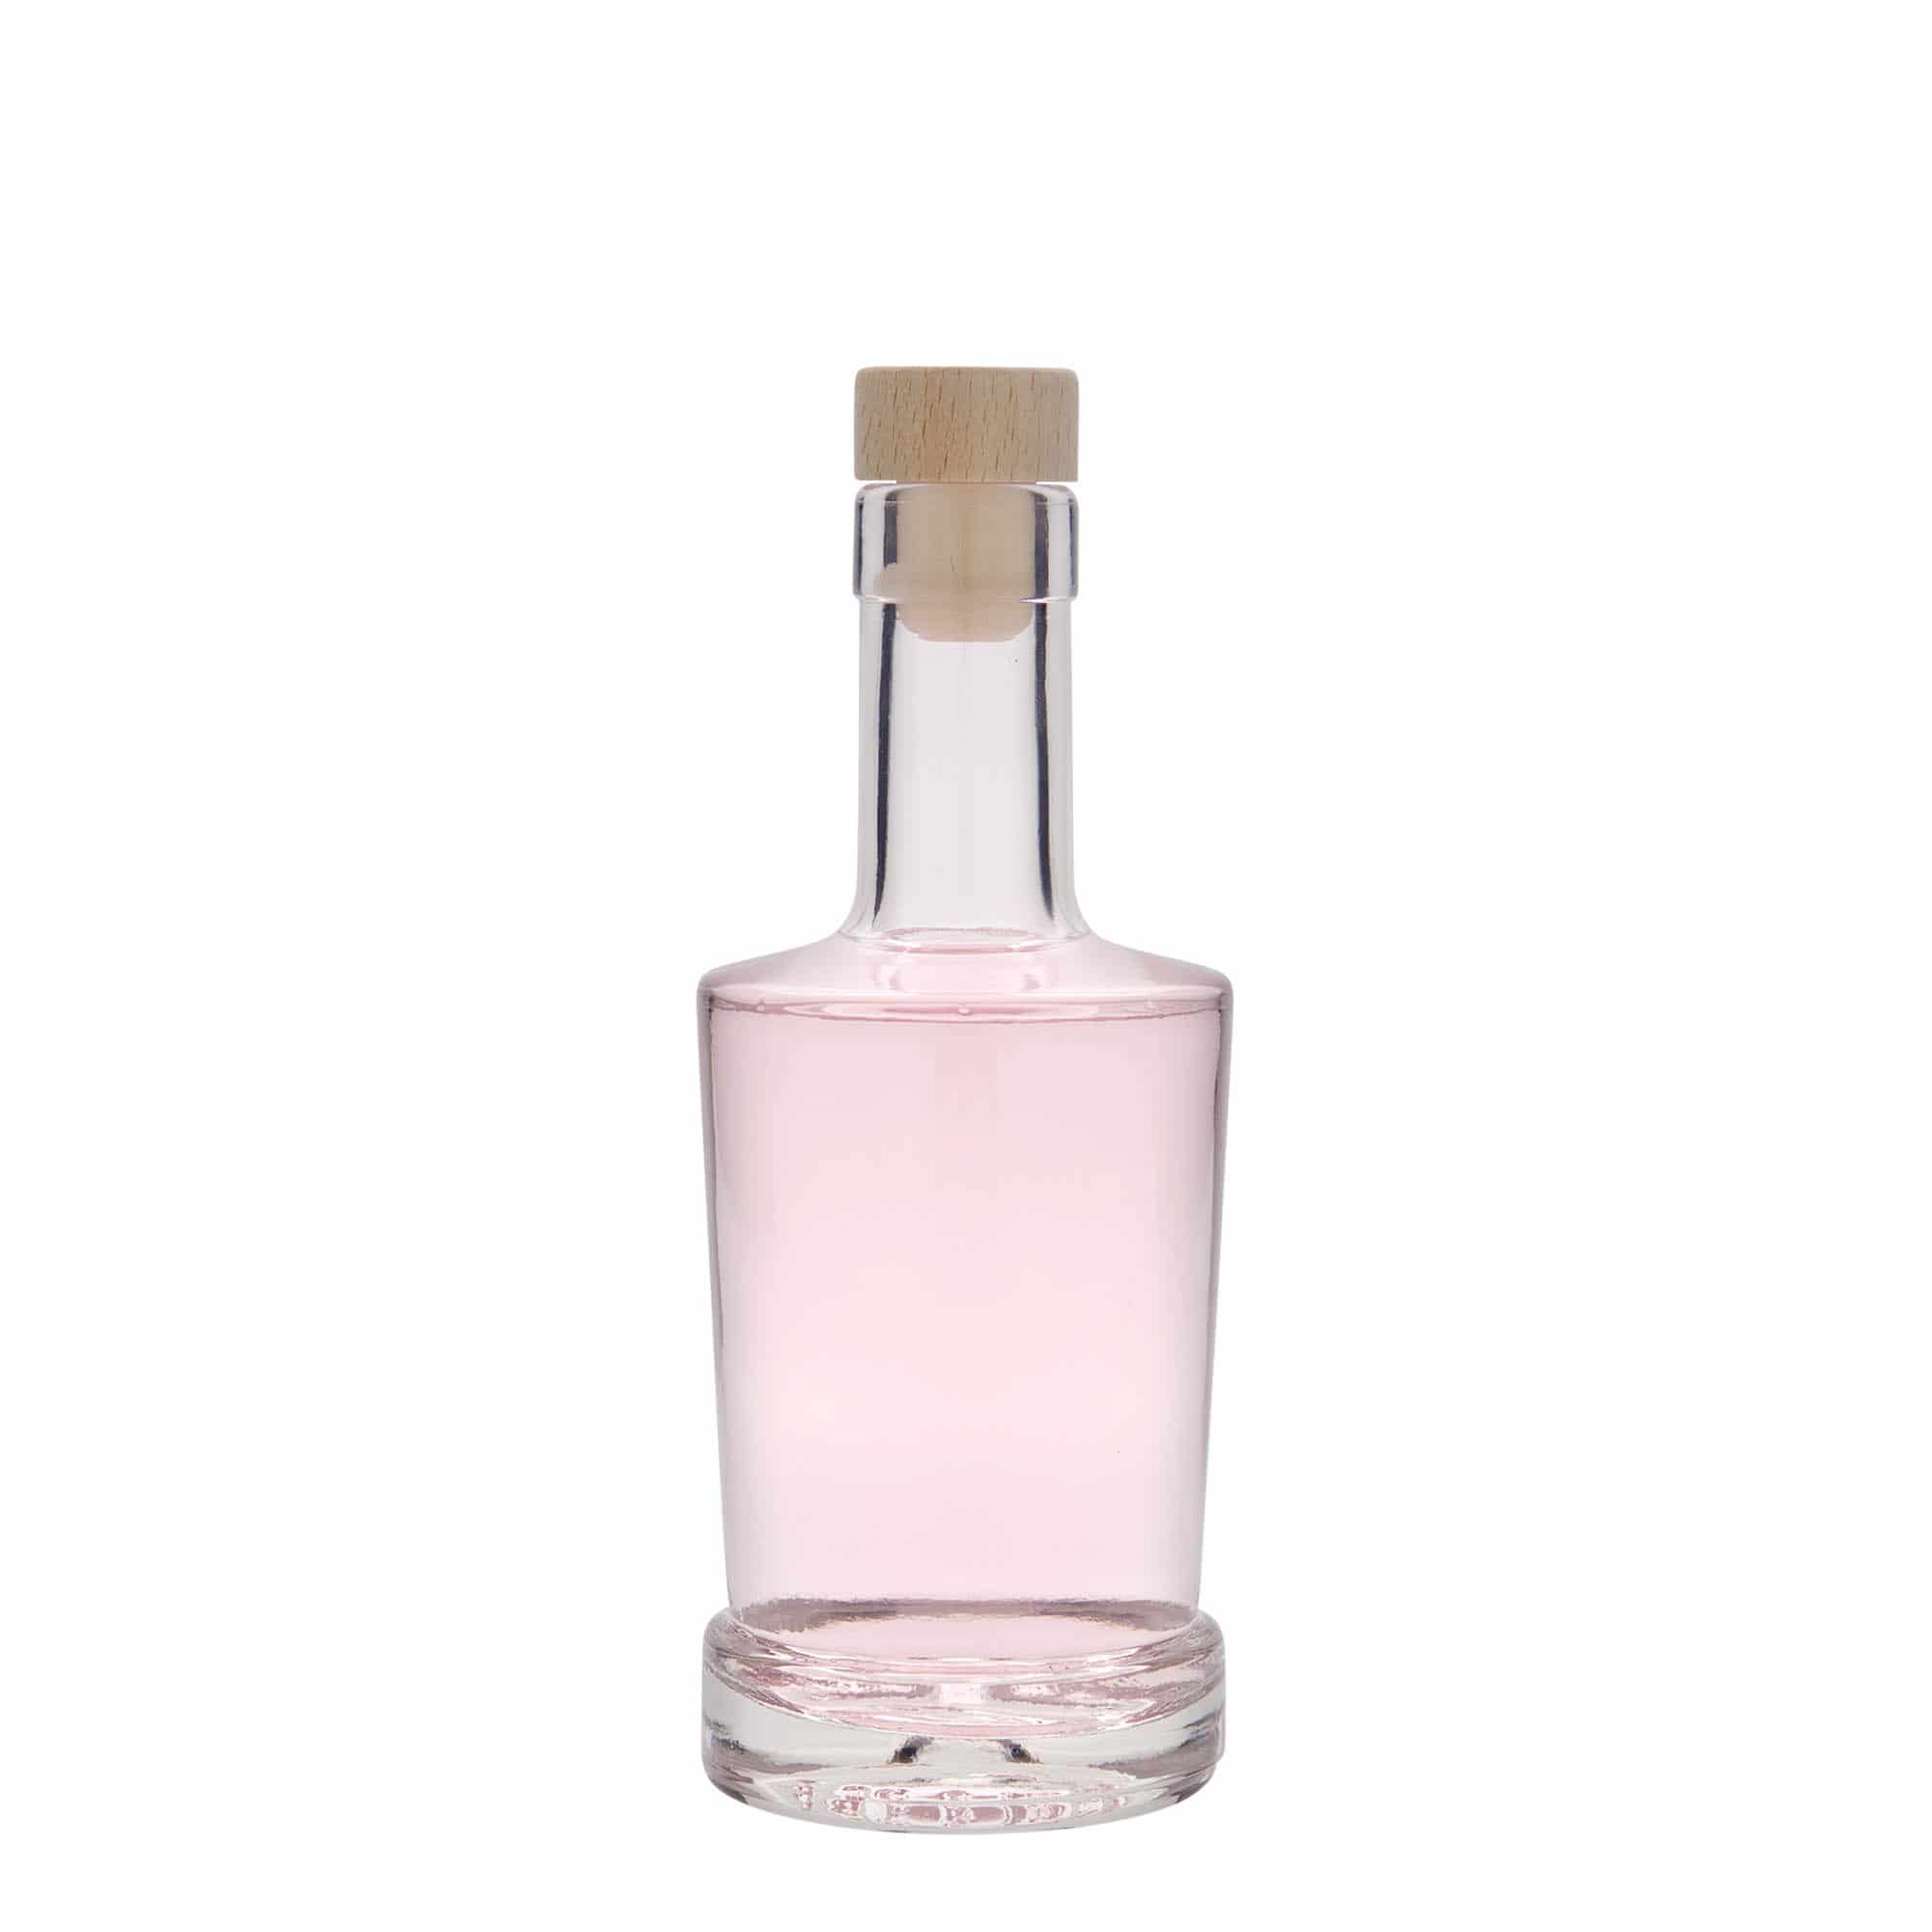 250 ml glass bottle 'Deborah', closure: cork